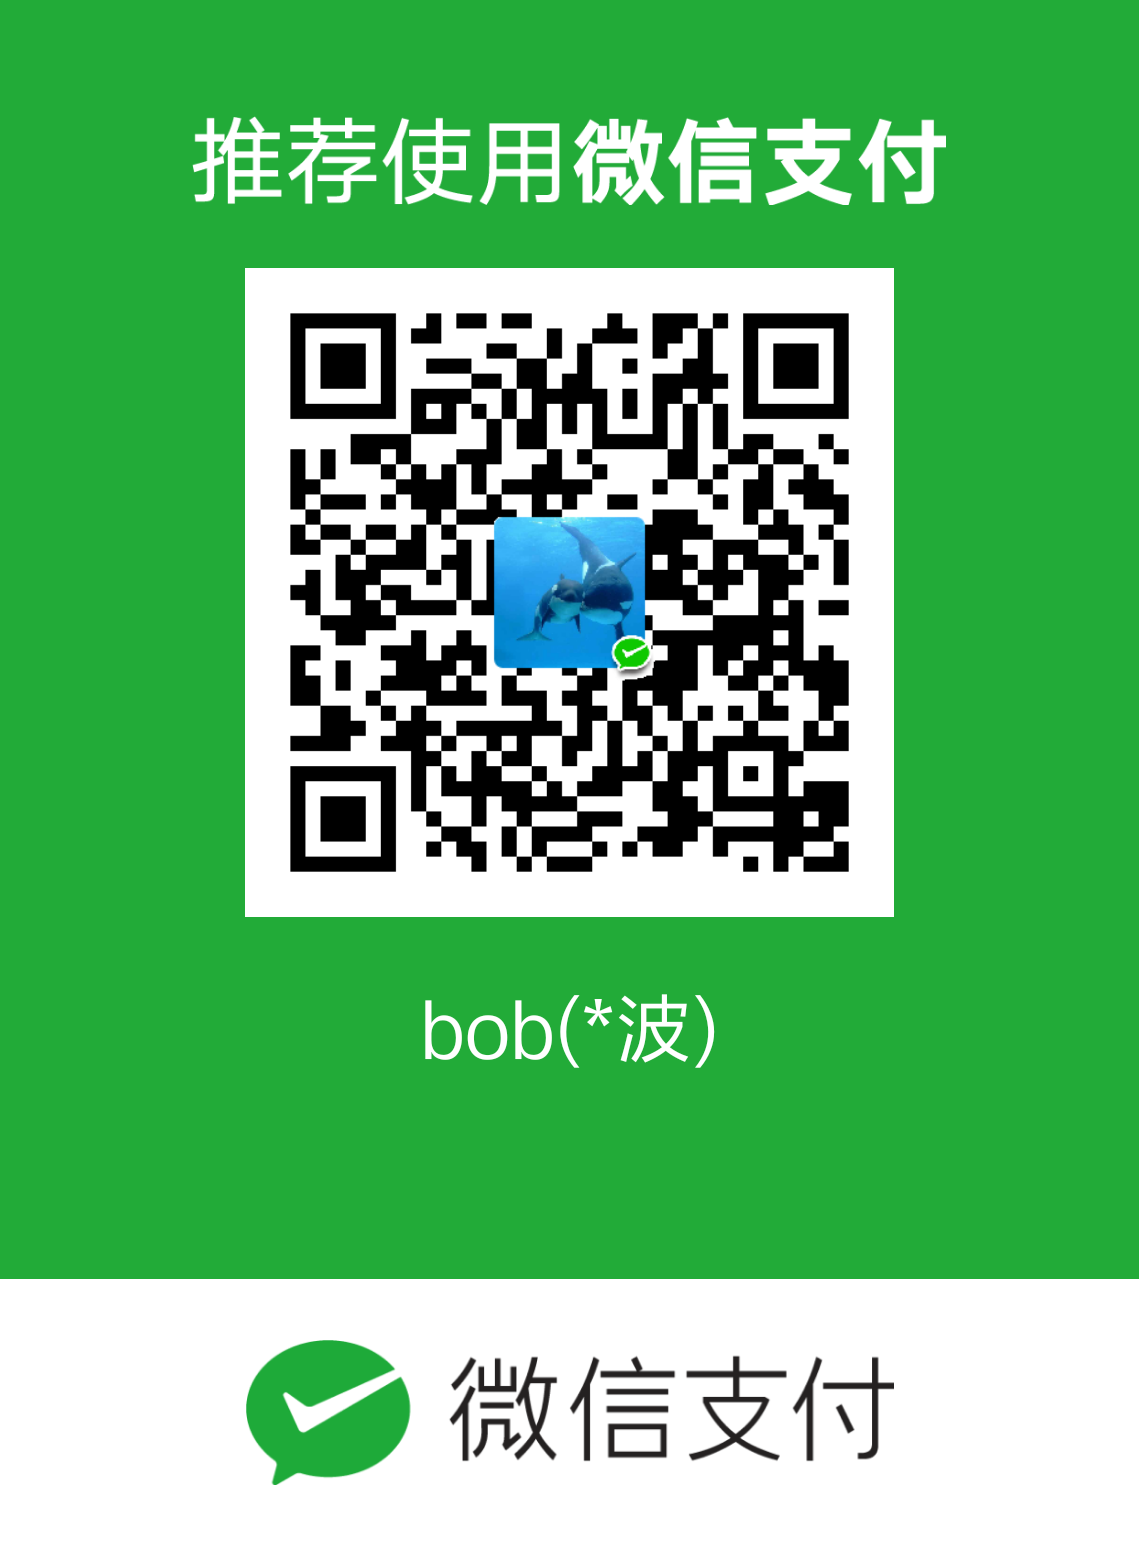 Bob WeChat Pay